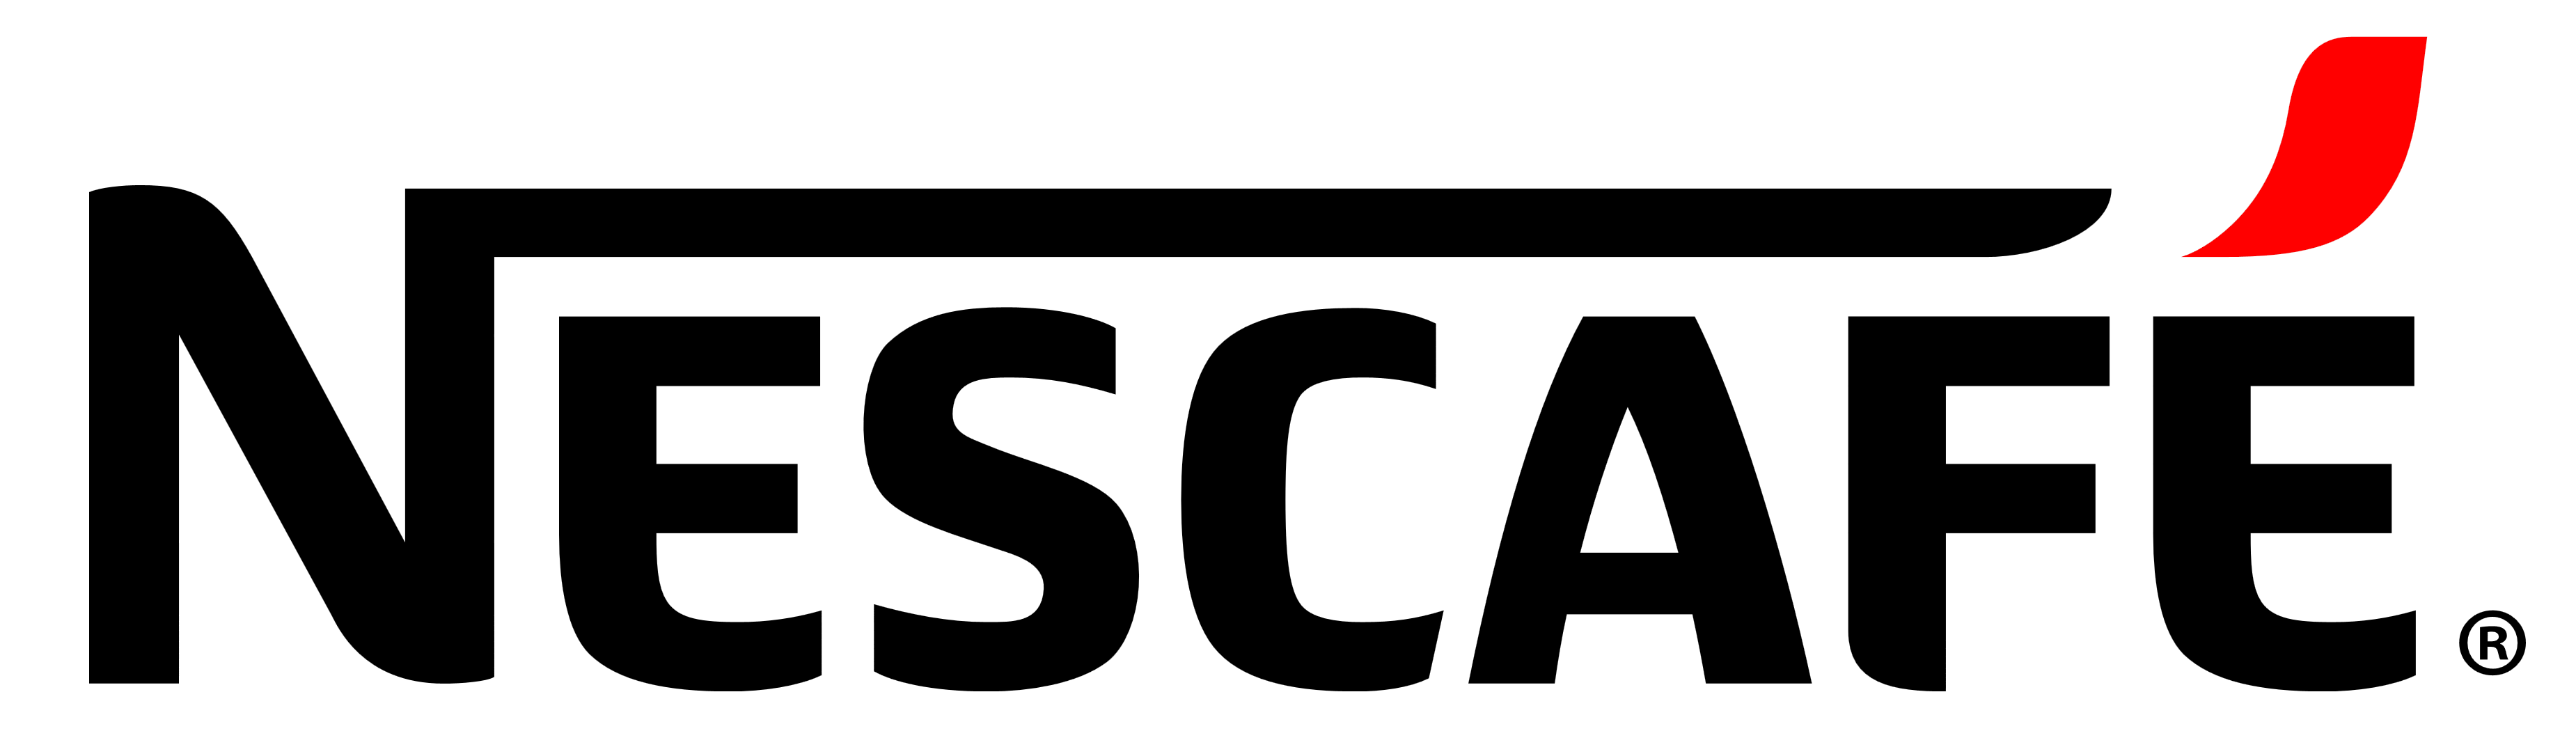 Nescafe logo, logotype